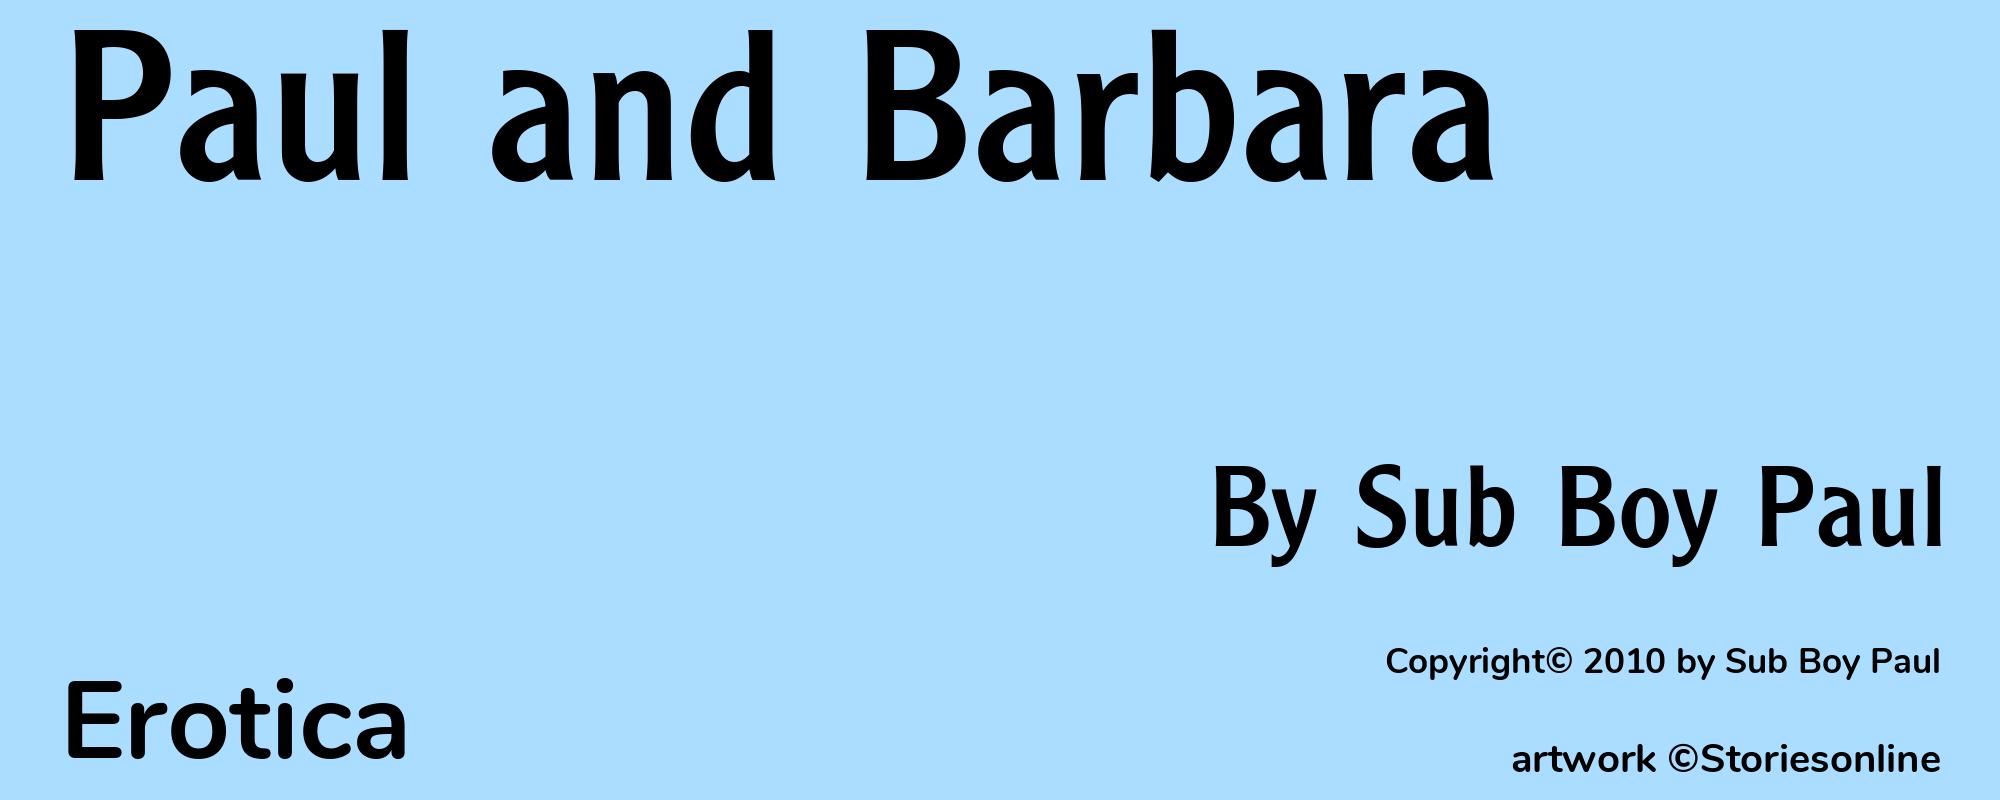 Paul and Barbara - Cover